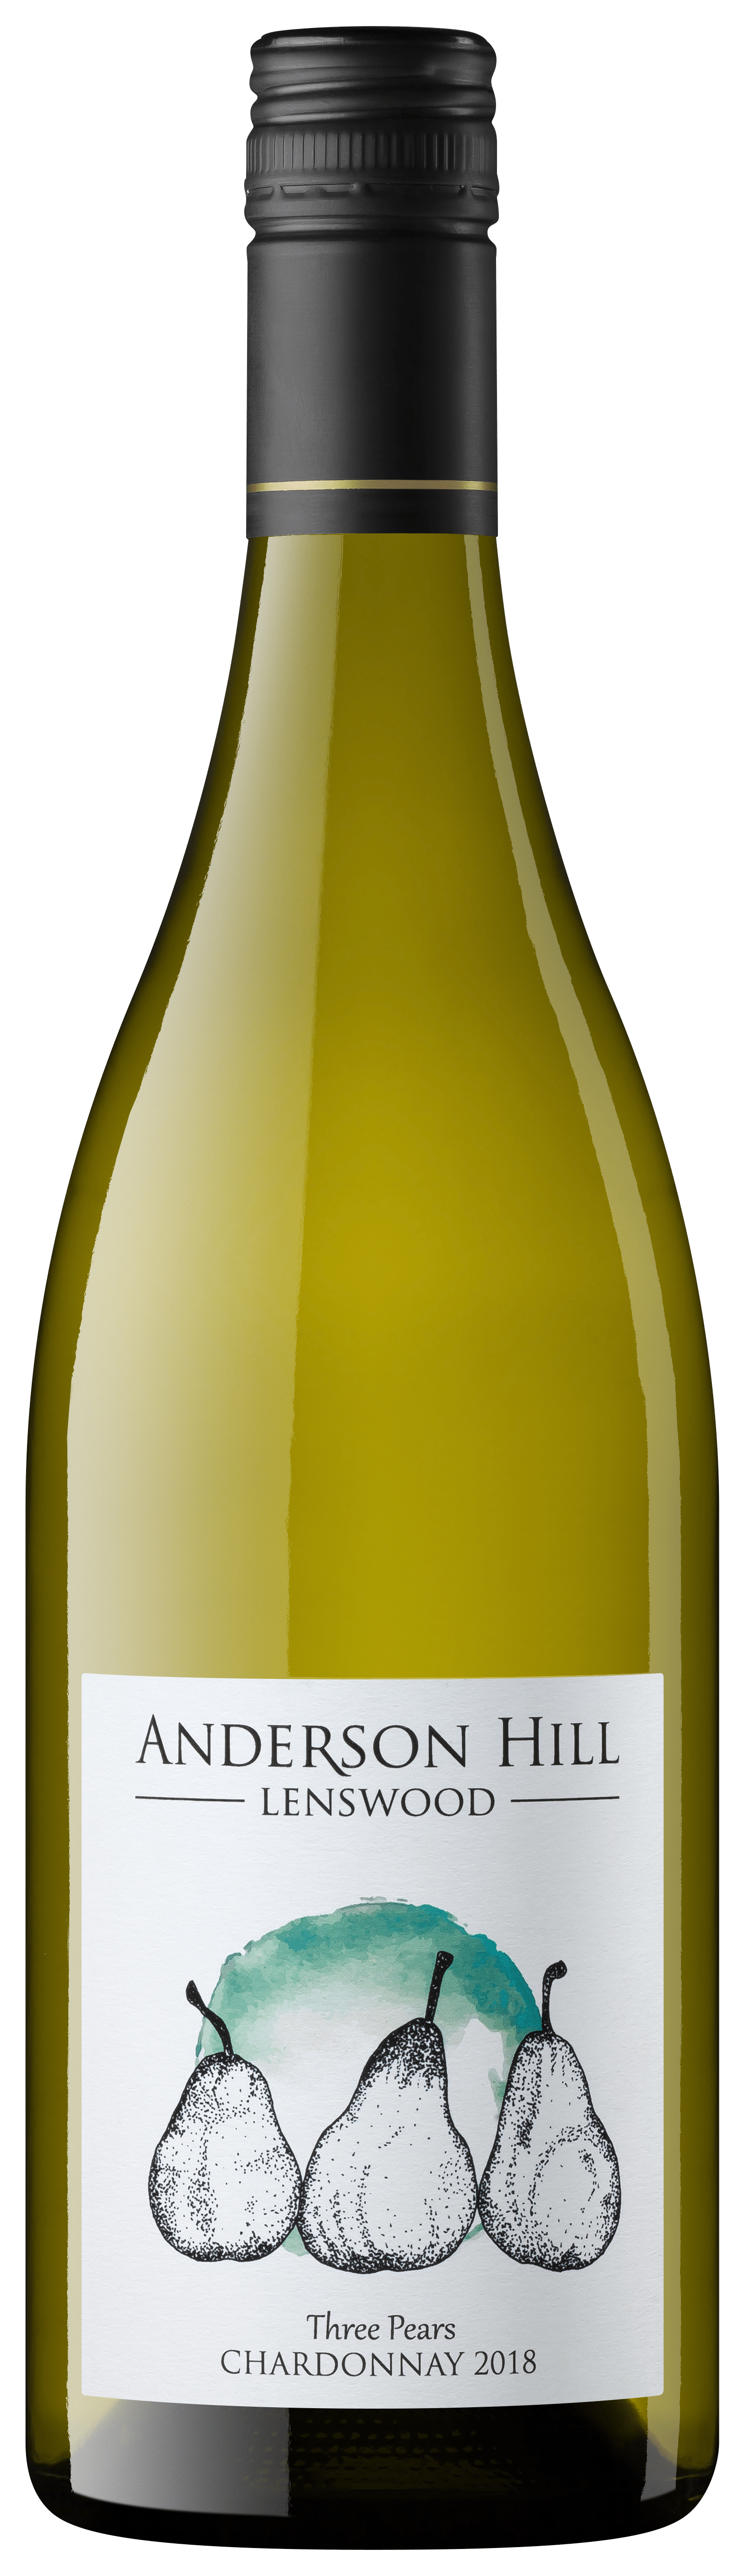 Anderson Hill Chardonnay